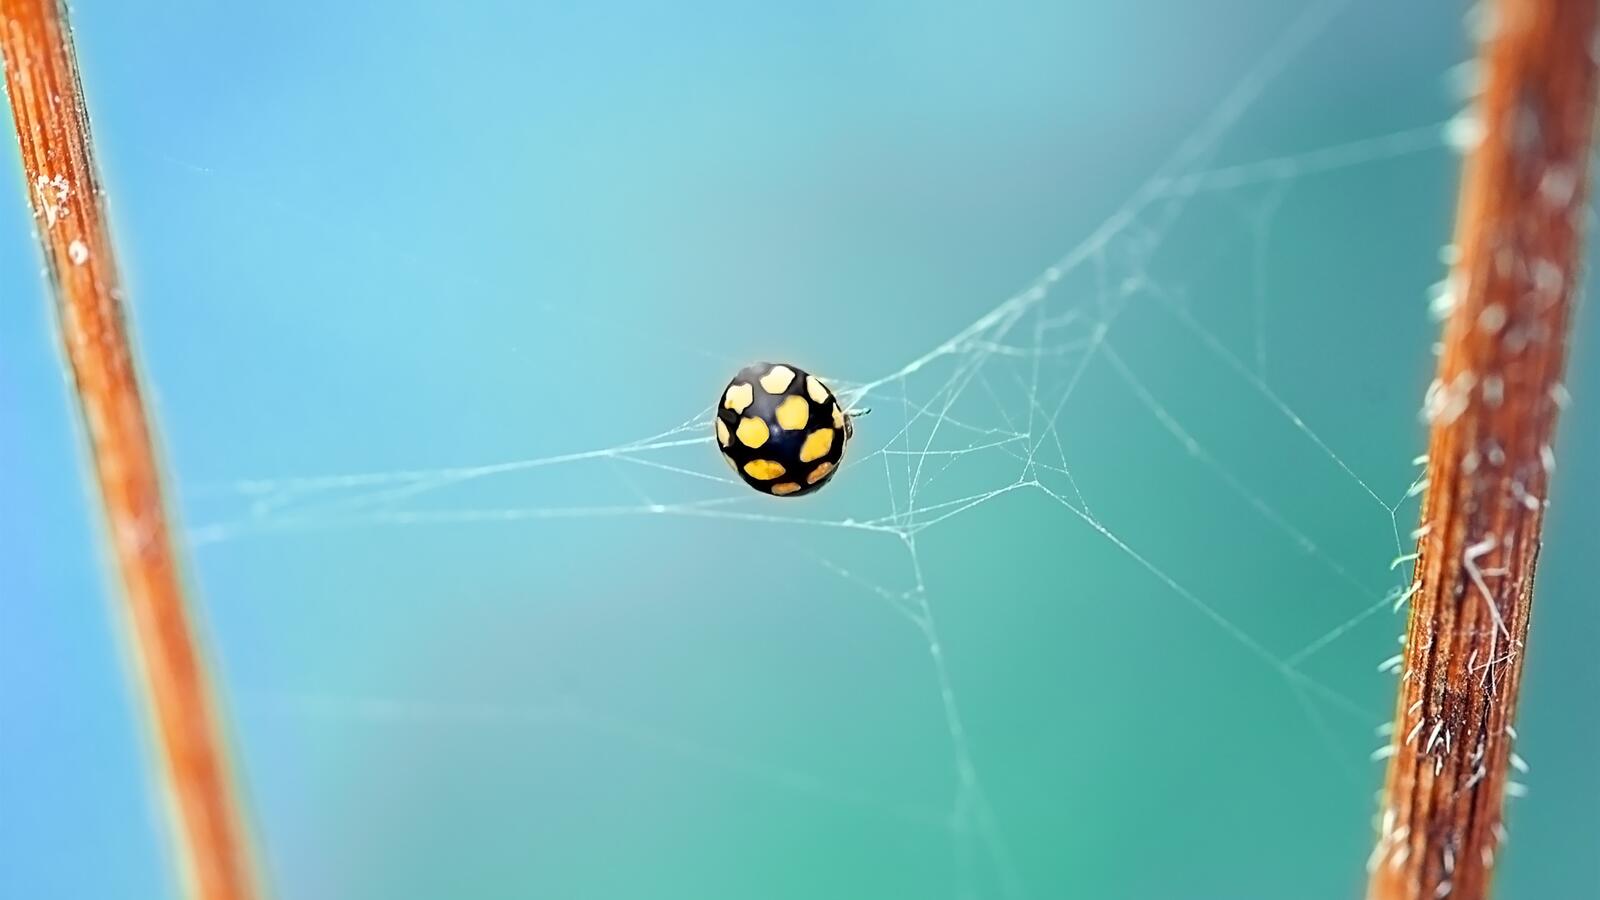 Wallpapers spider web ladybug macro on the desktop